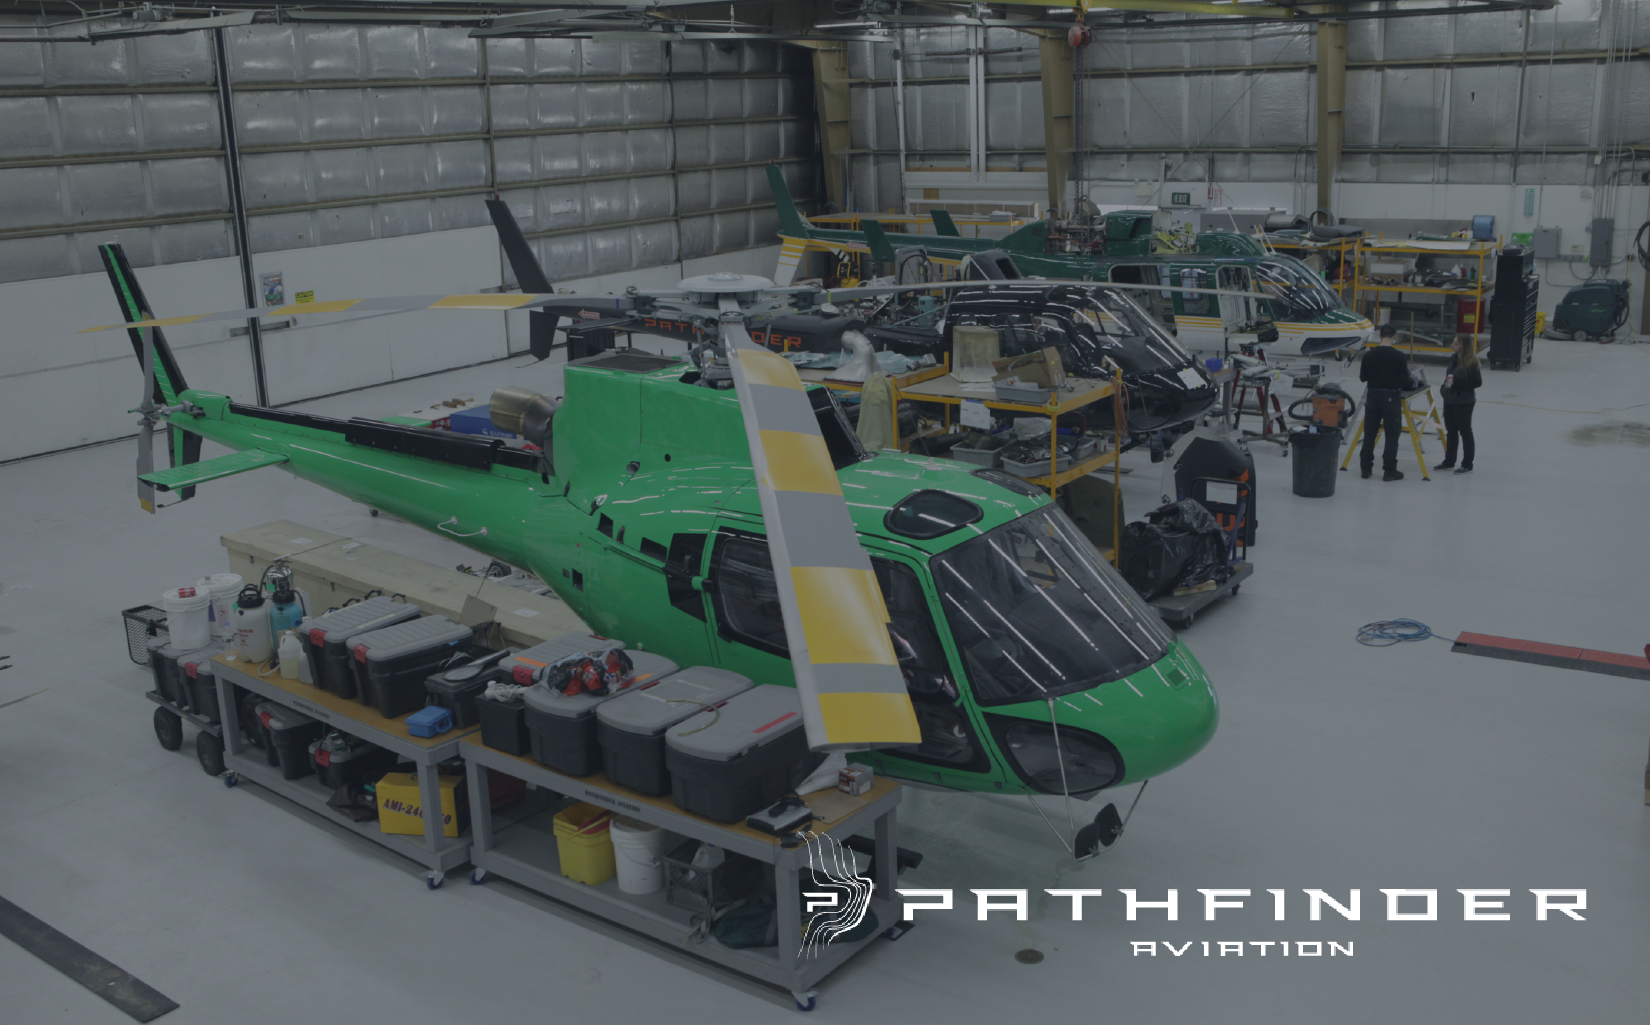 Case Study: Pathfinder Aviation Optimized for Remote Management